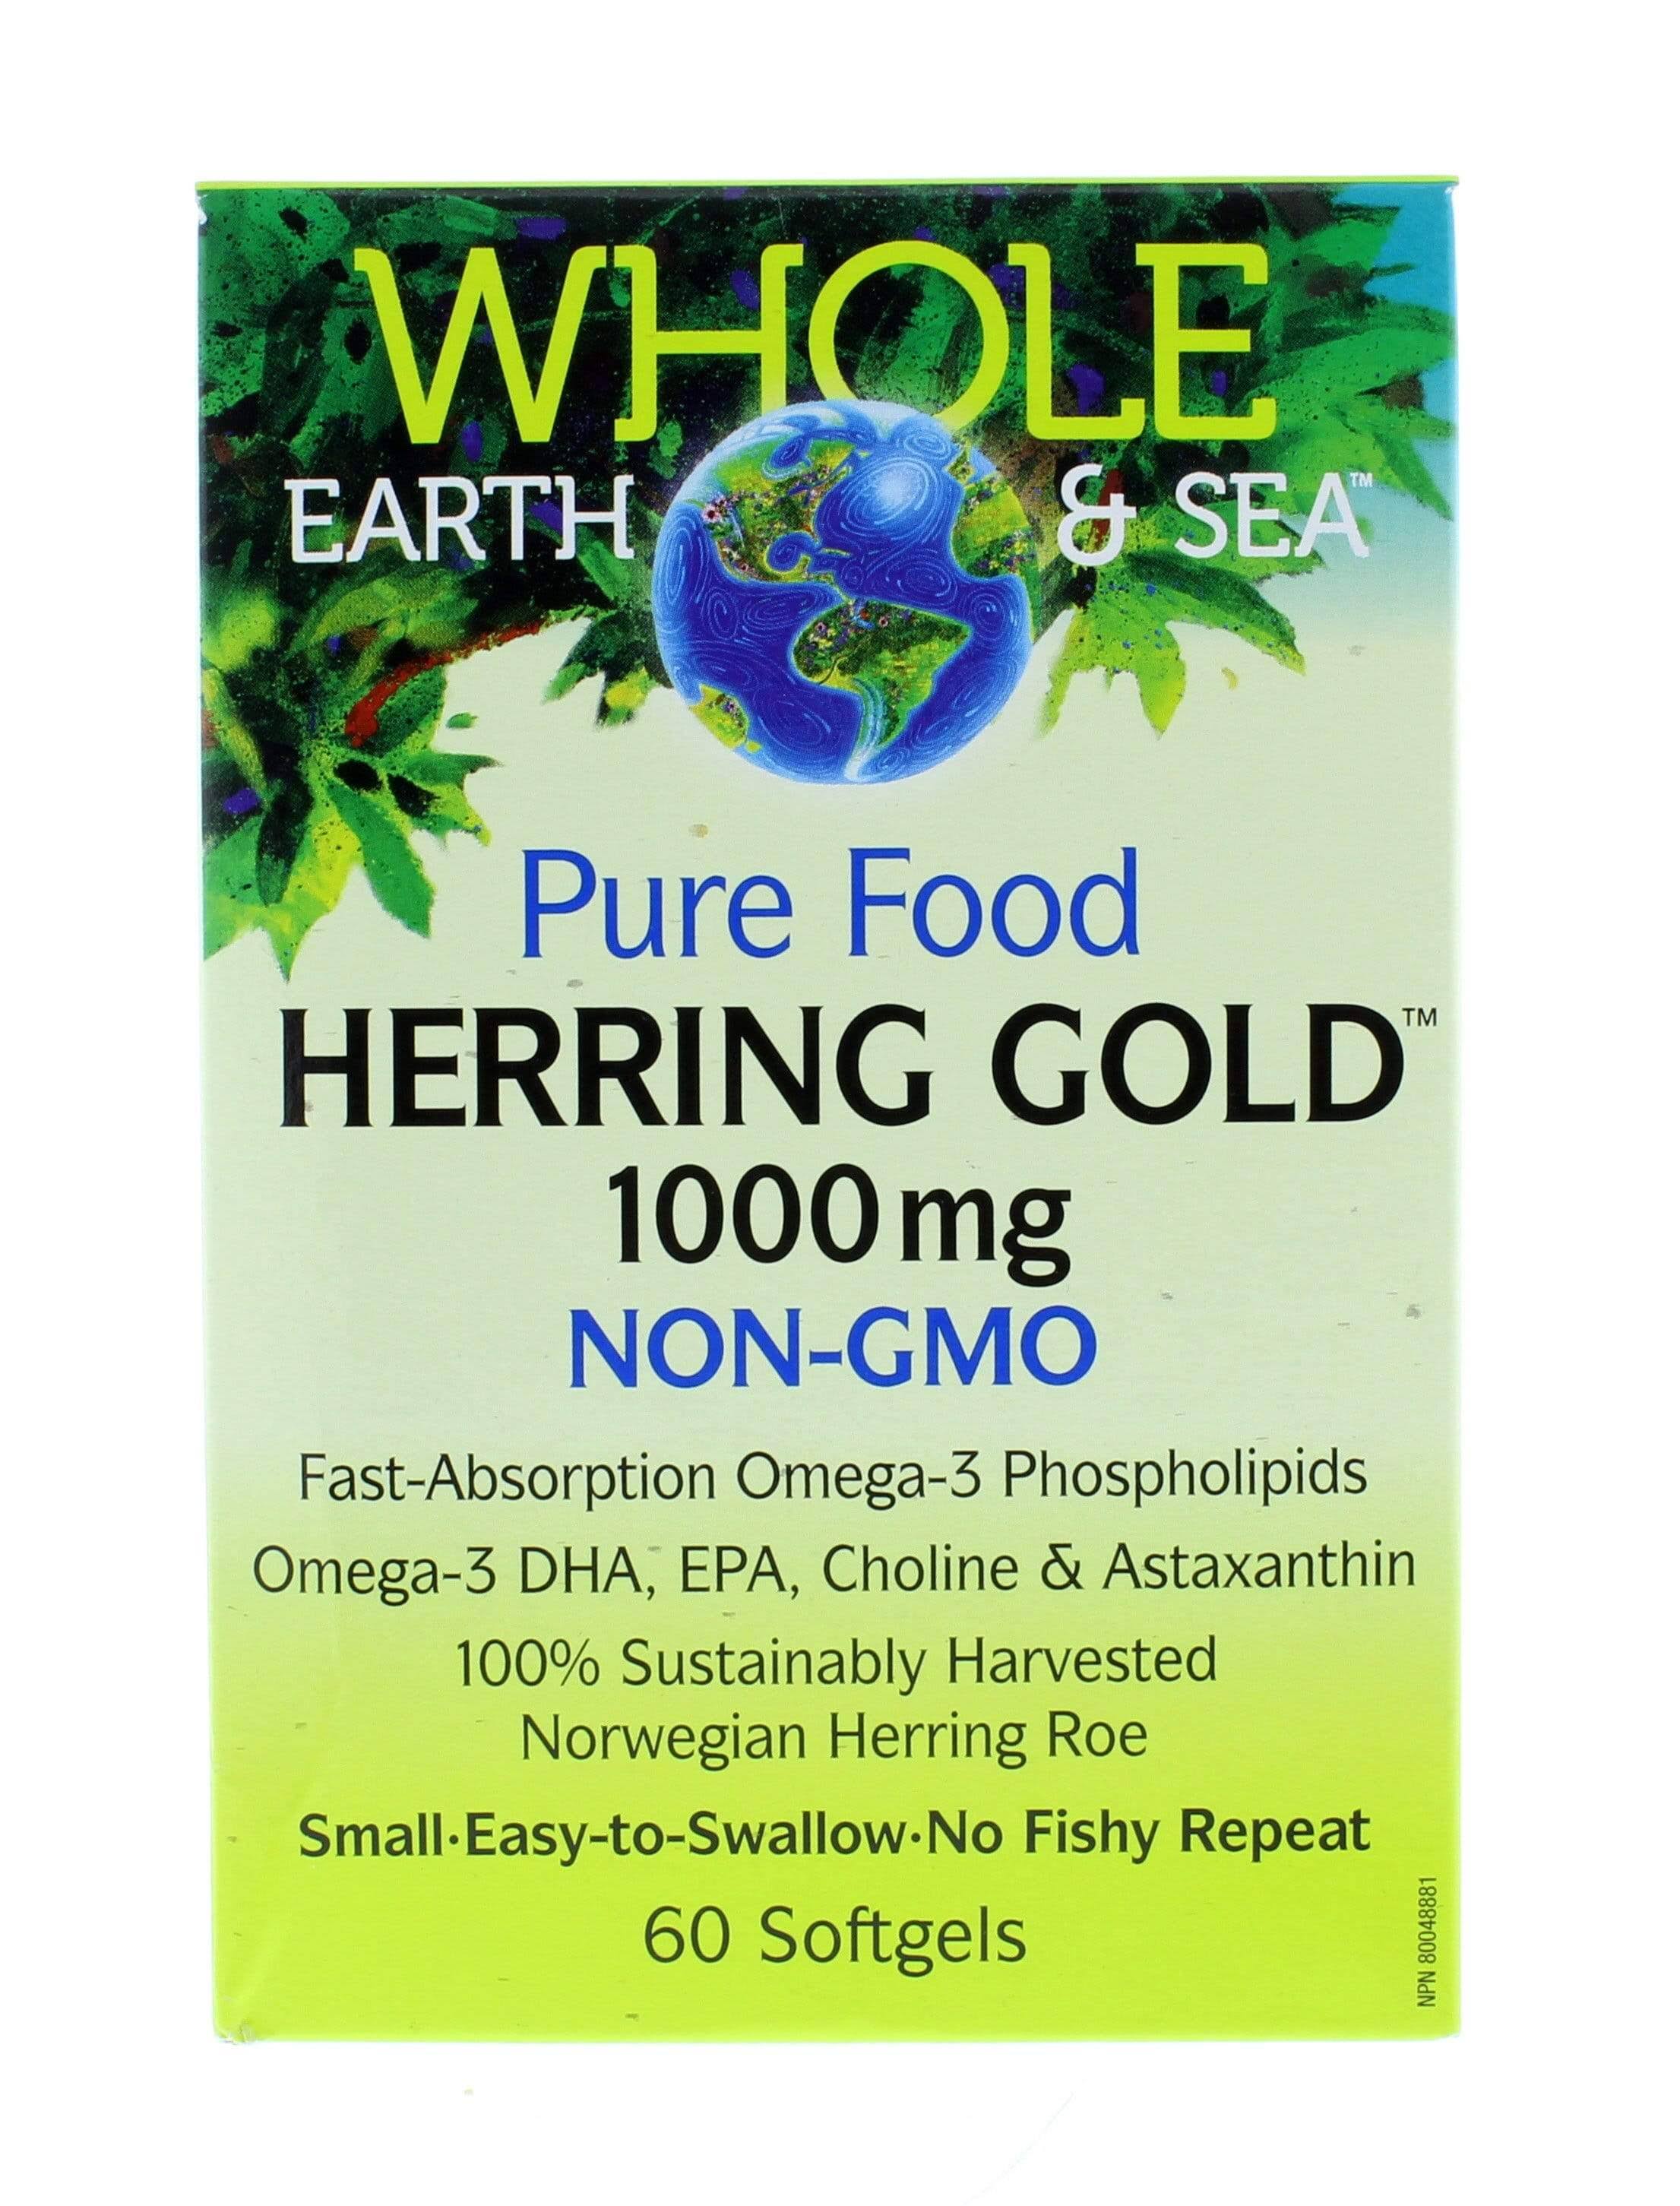 Natural Factors Whole Earth And Sea Herring Gold - 1000mg, 60 Softgels